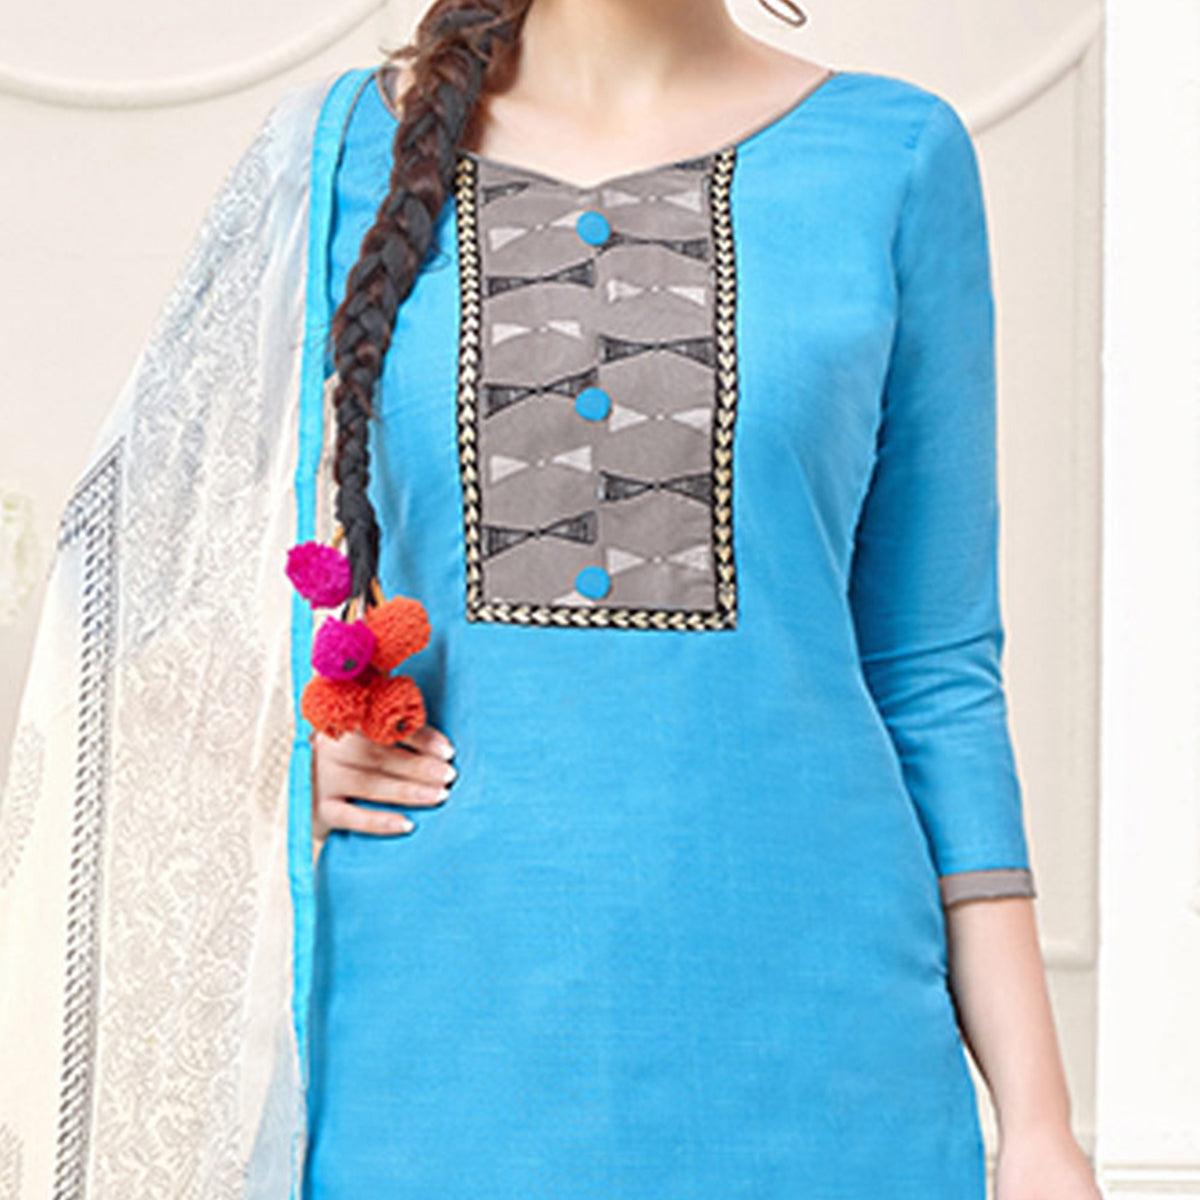 Blue Casual Printed Cotton Salwar Suit - Peachmode